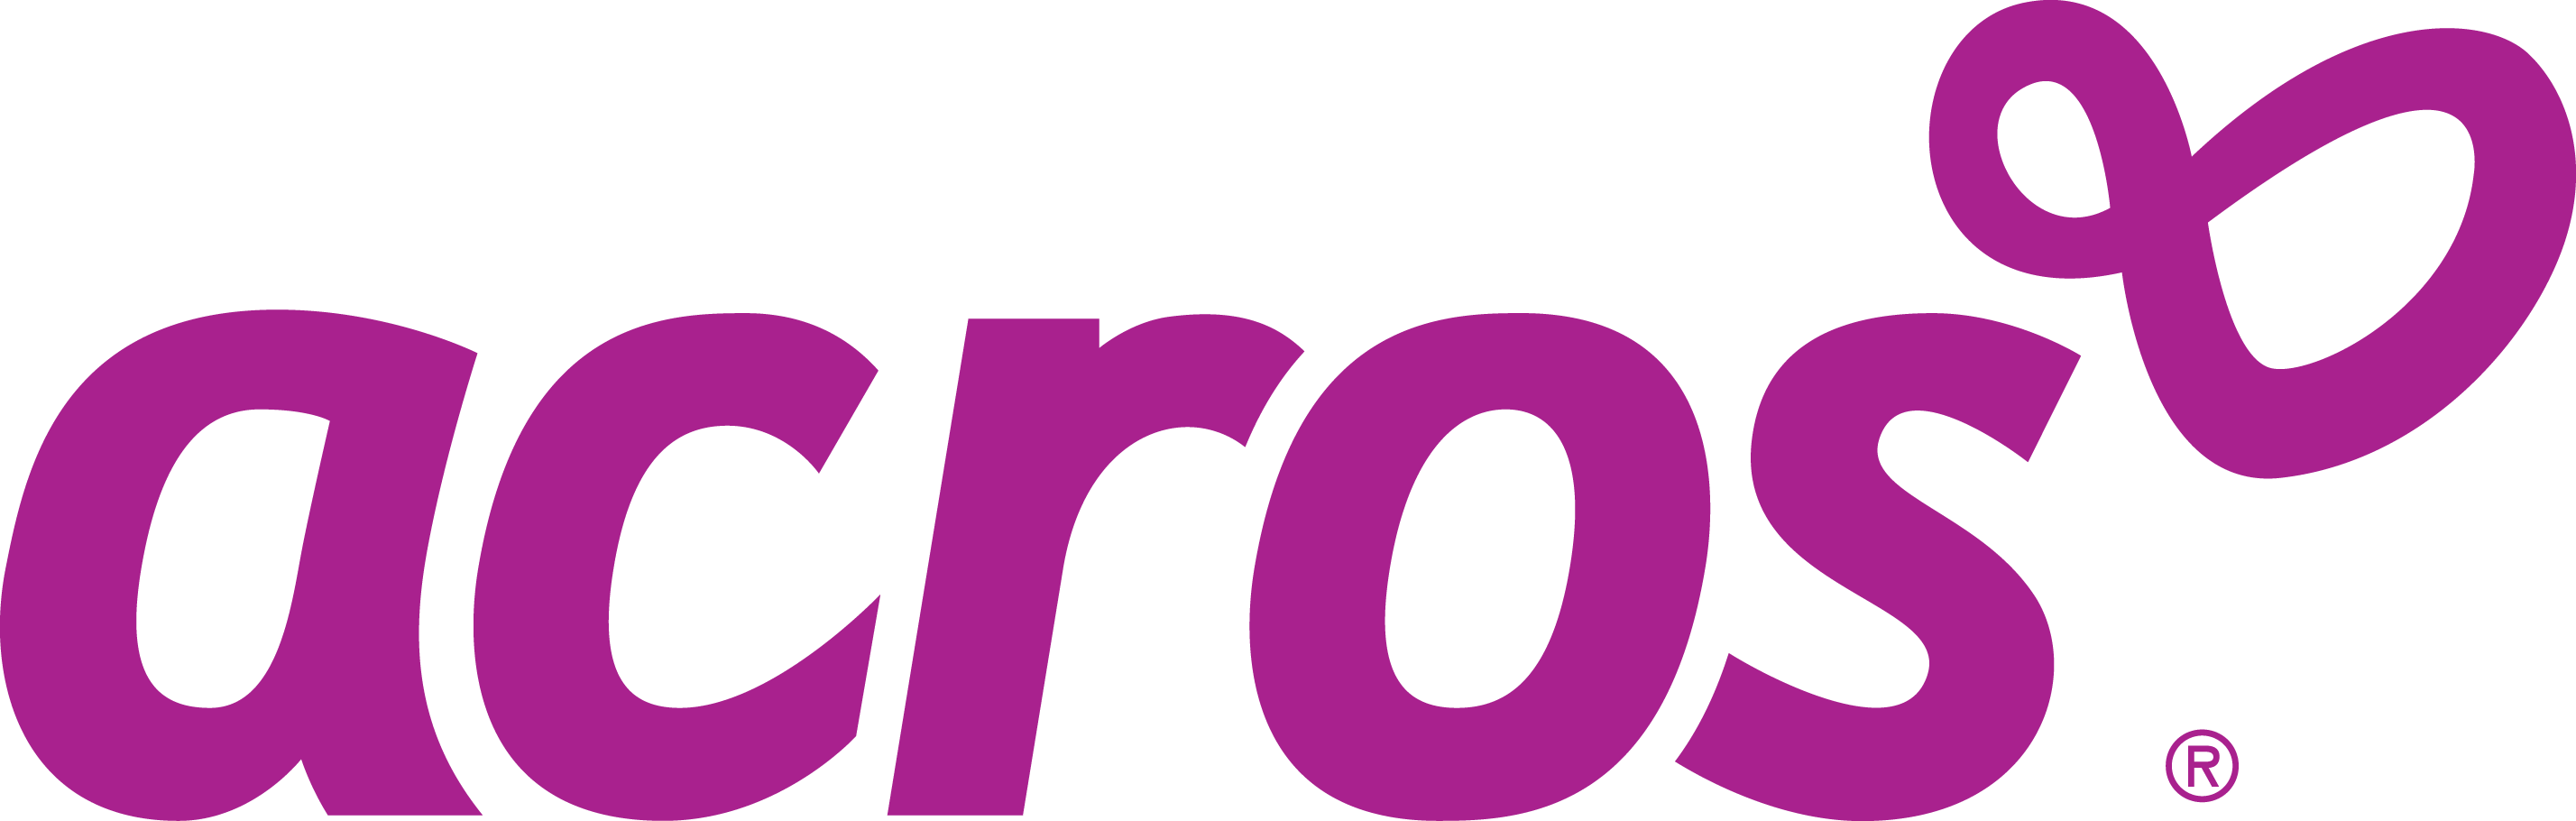 Whilpool Logo - Media Hub – Logos | Whirlpool Corporation